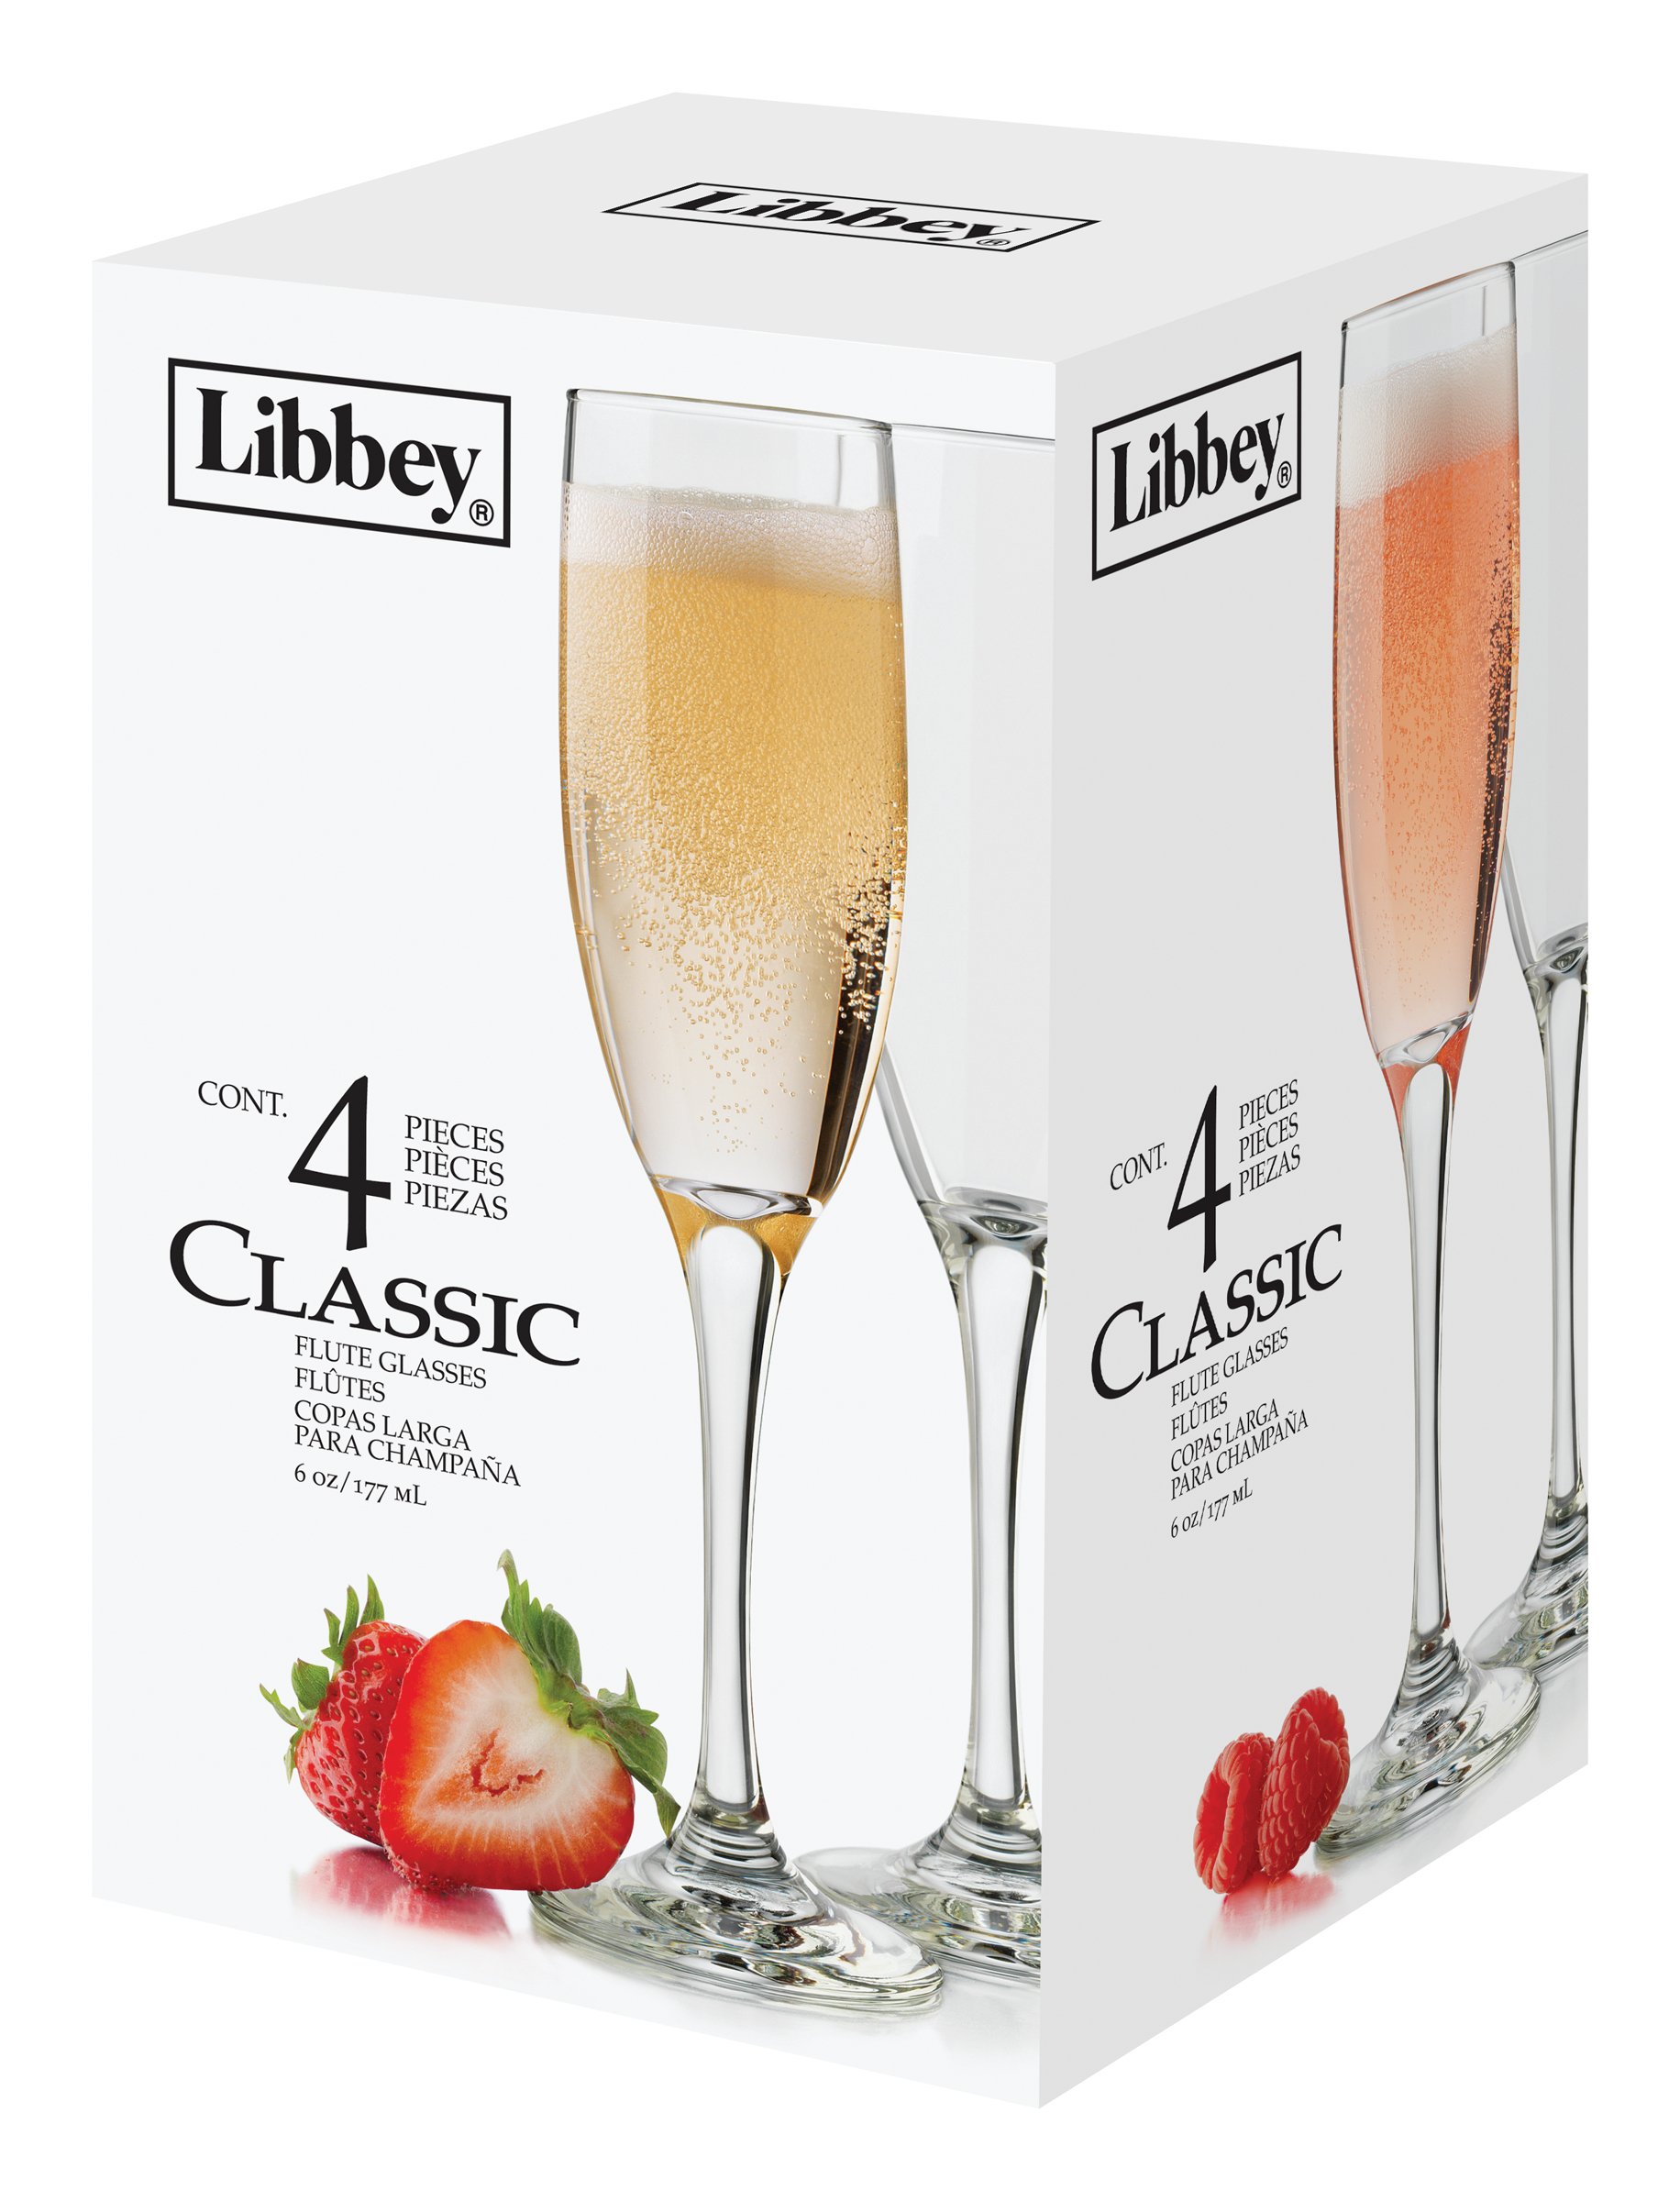 Libbey Classic Flute Glasses - Shop Glasses & Mugs at H-E-B